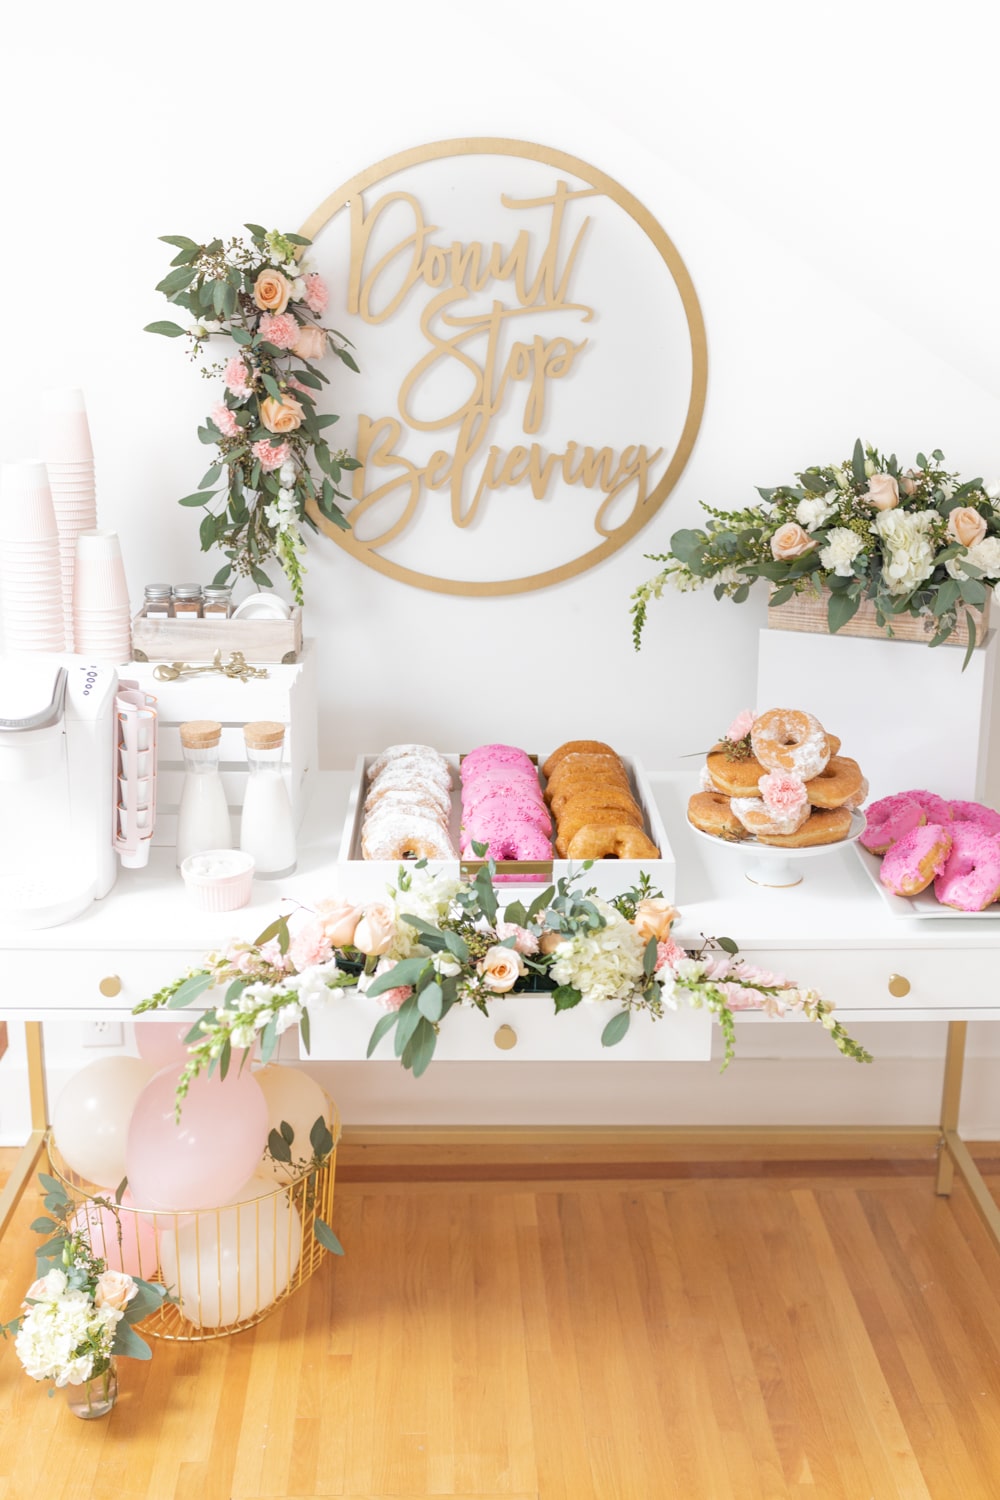 Donut party ideas from blogger Stephanie Ziajka on Diary of a Debutante